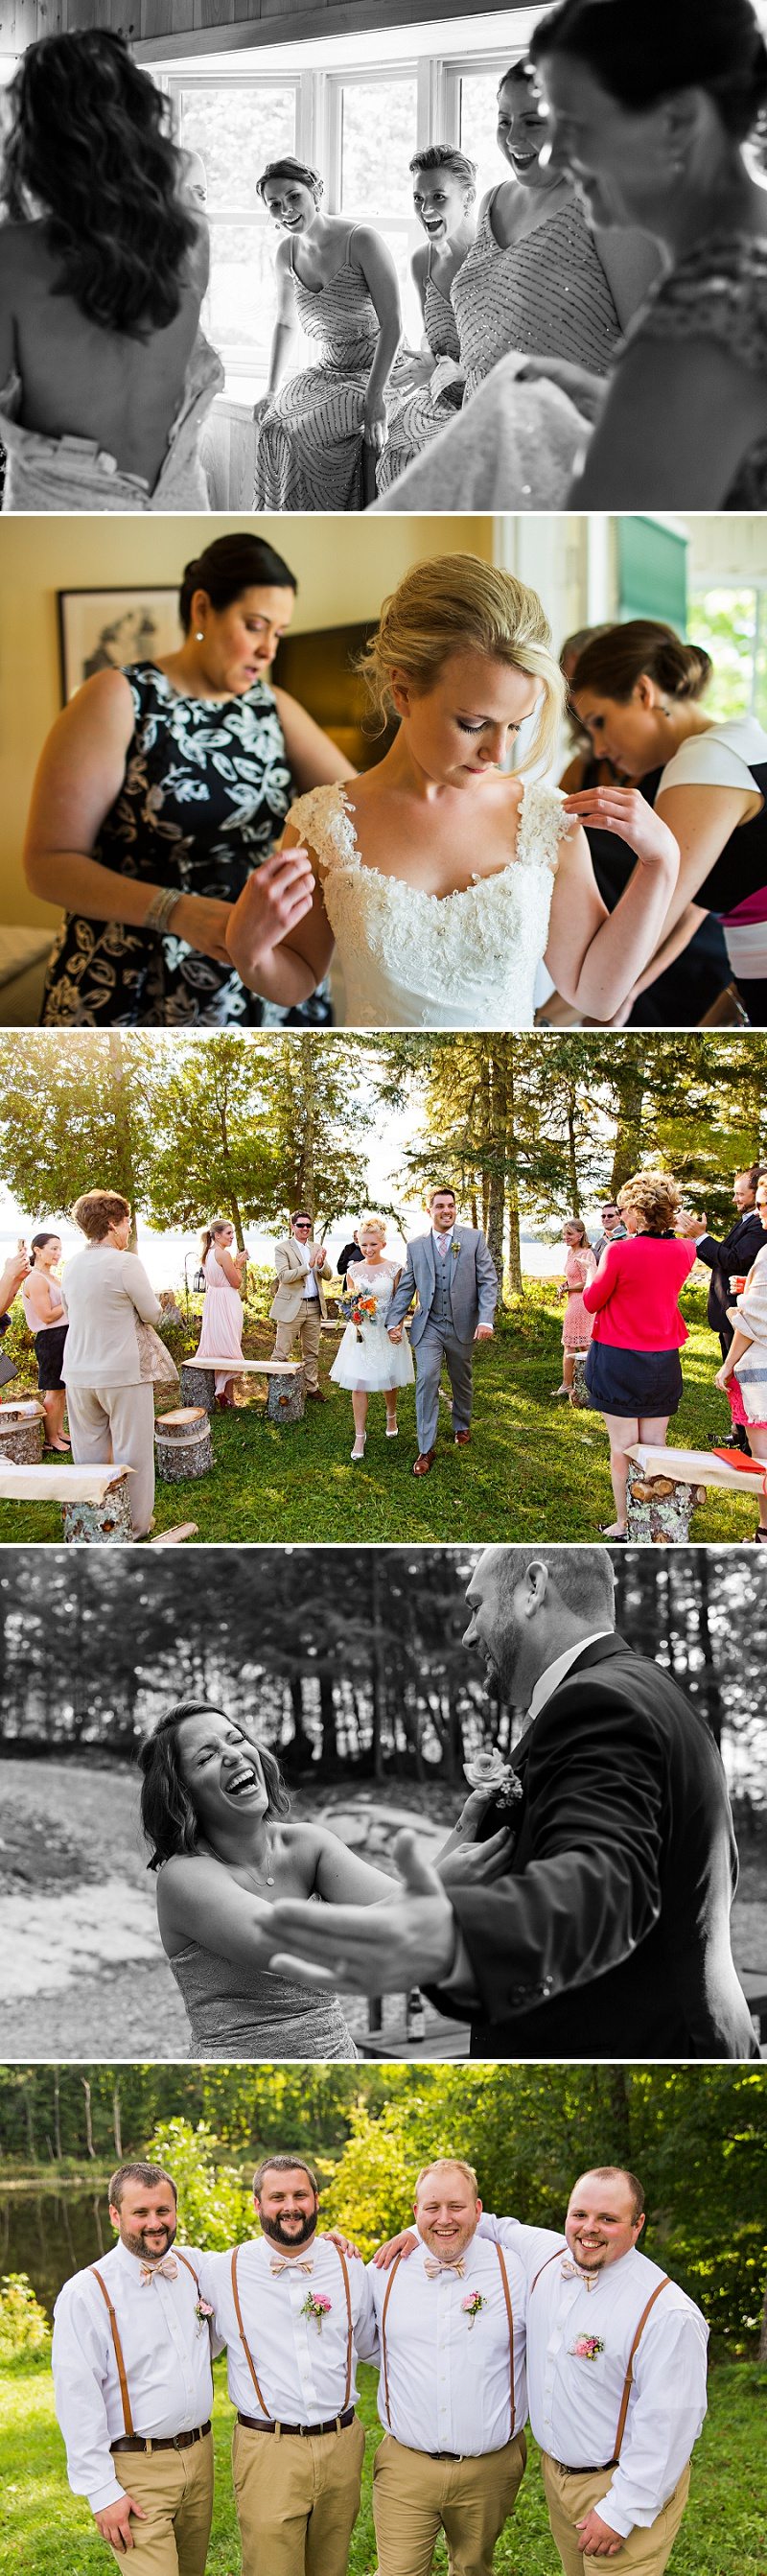 Best-wedding-photos-of-2015-0017